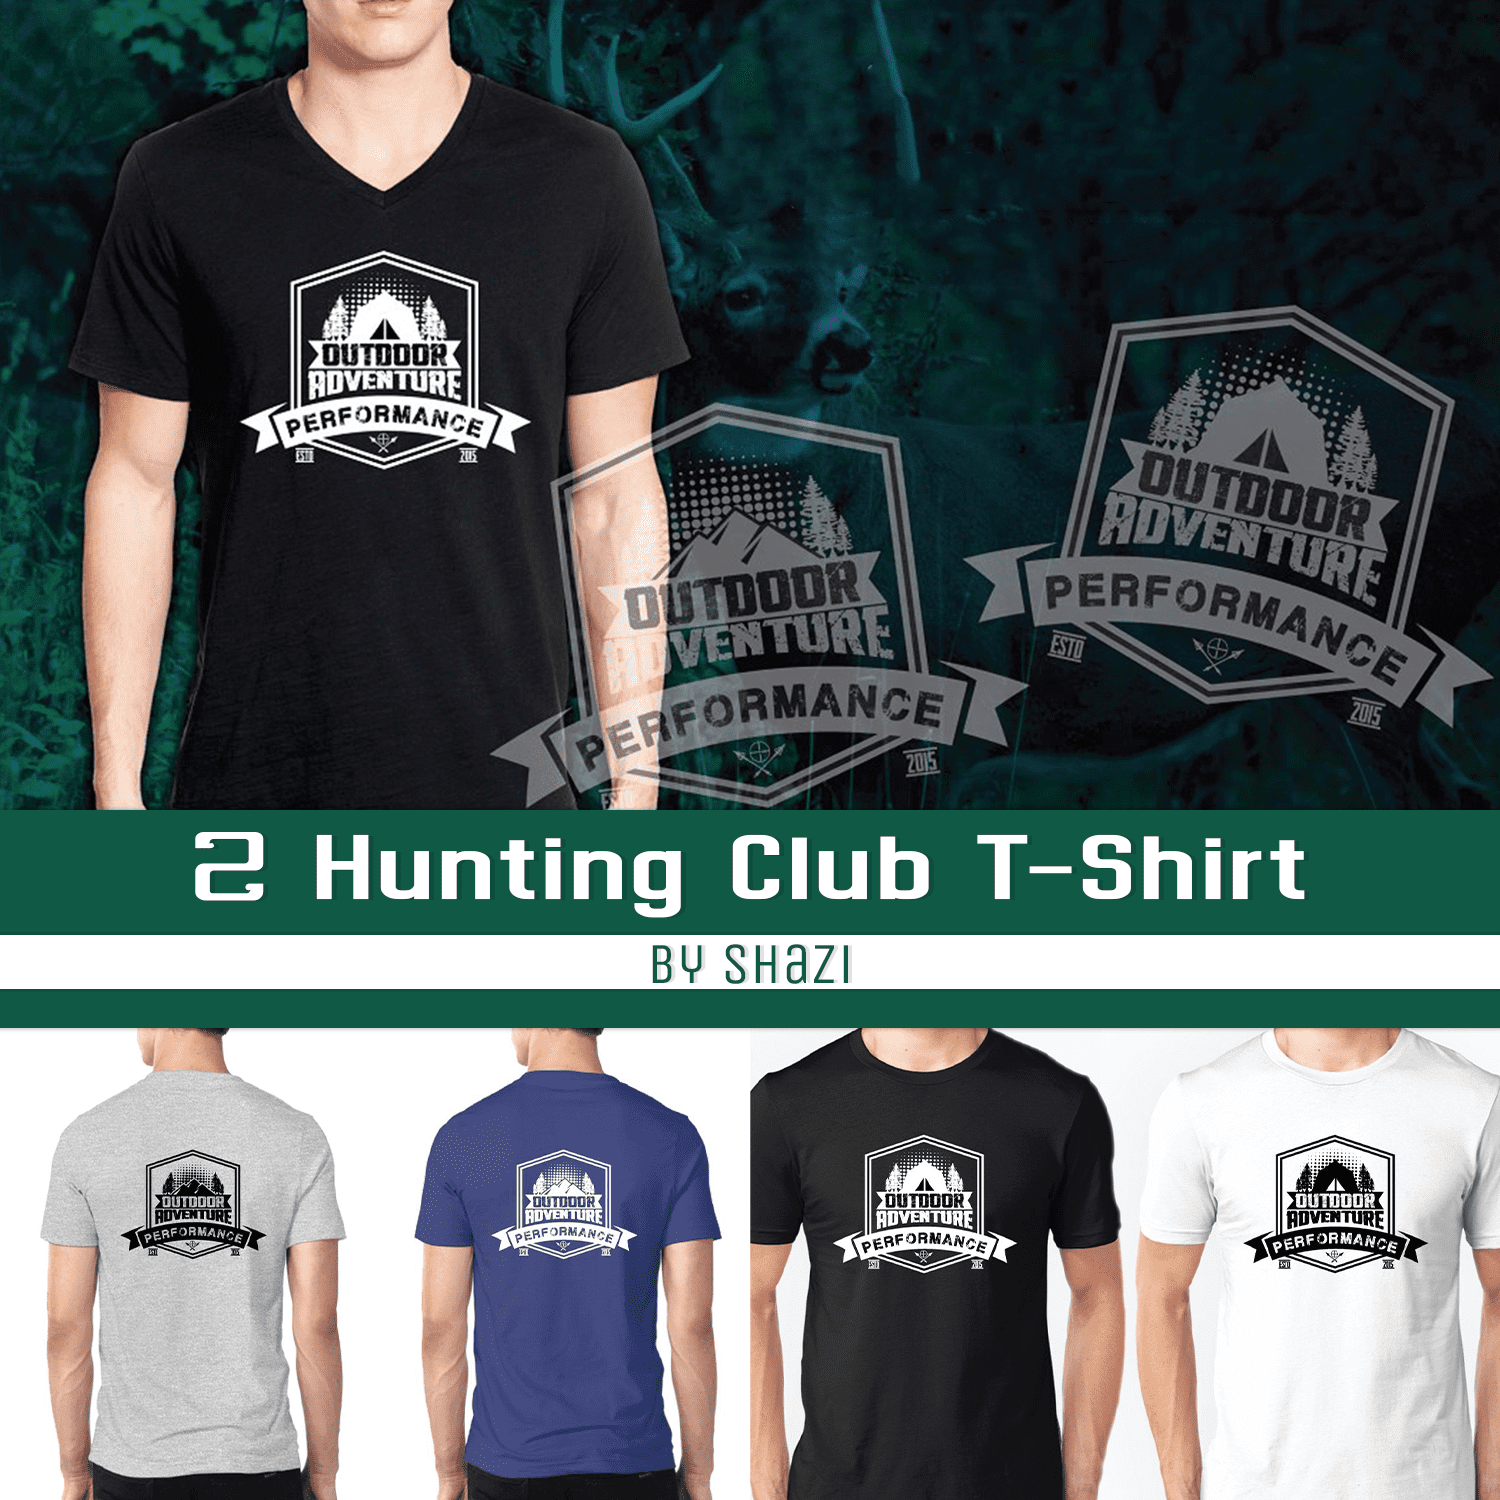 2 Hunting Club T-Shirt.